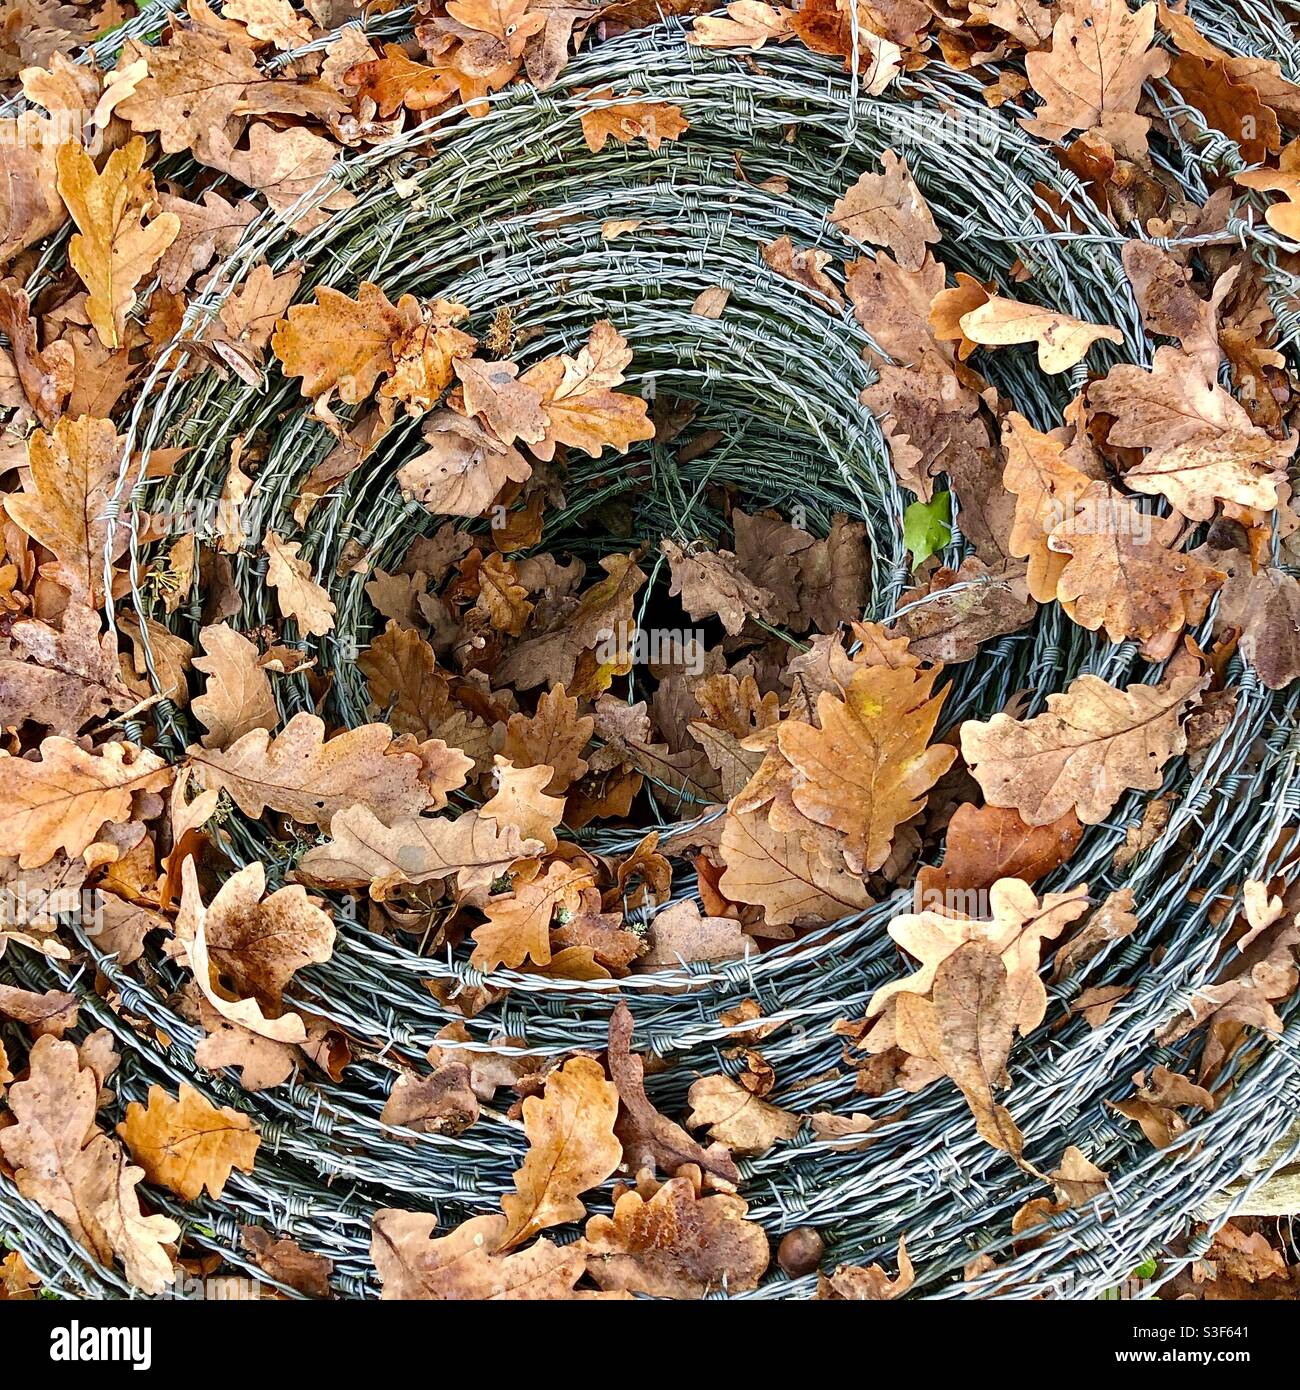 Roll of wire netting covered in fallen Oak tree leaves. Stock Photo